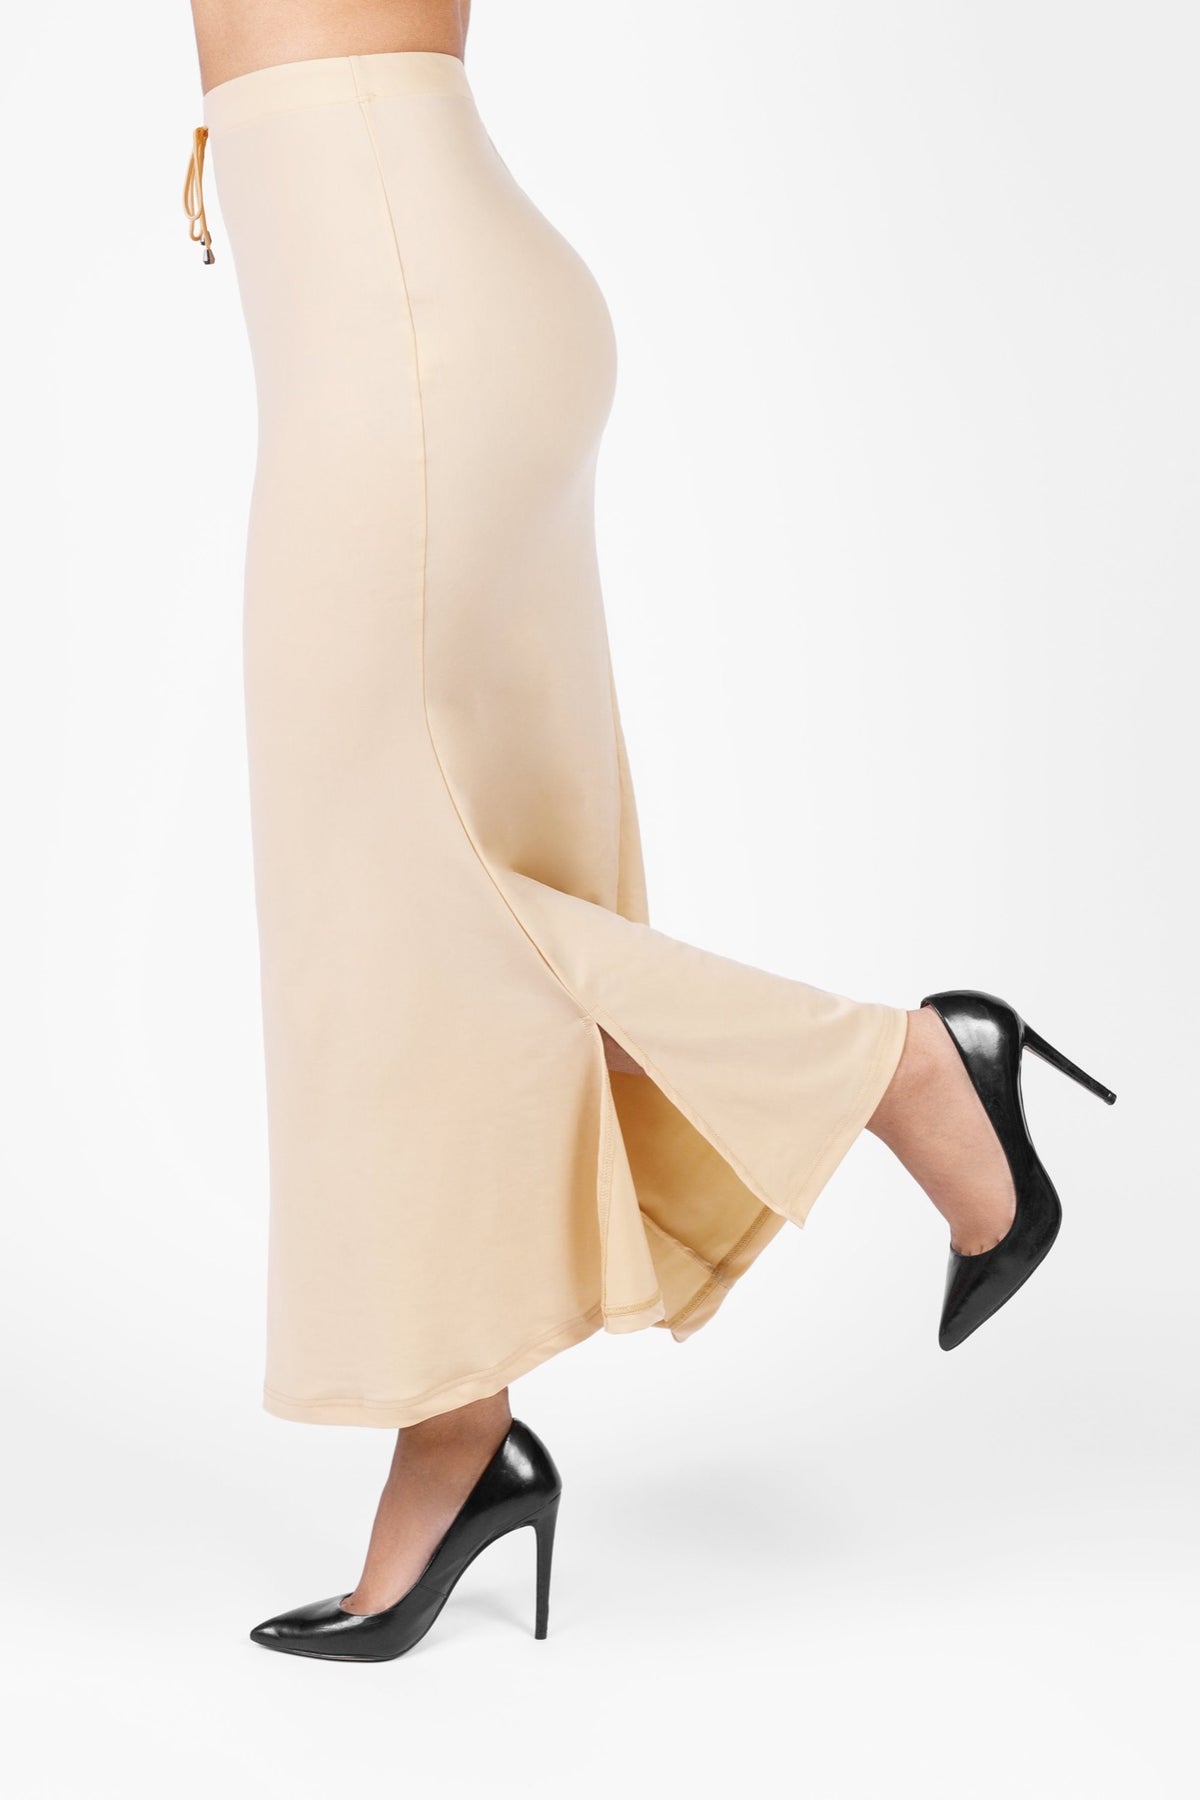 Gold Shimmer Saree Shape Wear Saree Petticoat Stretchable